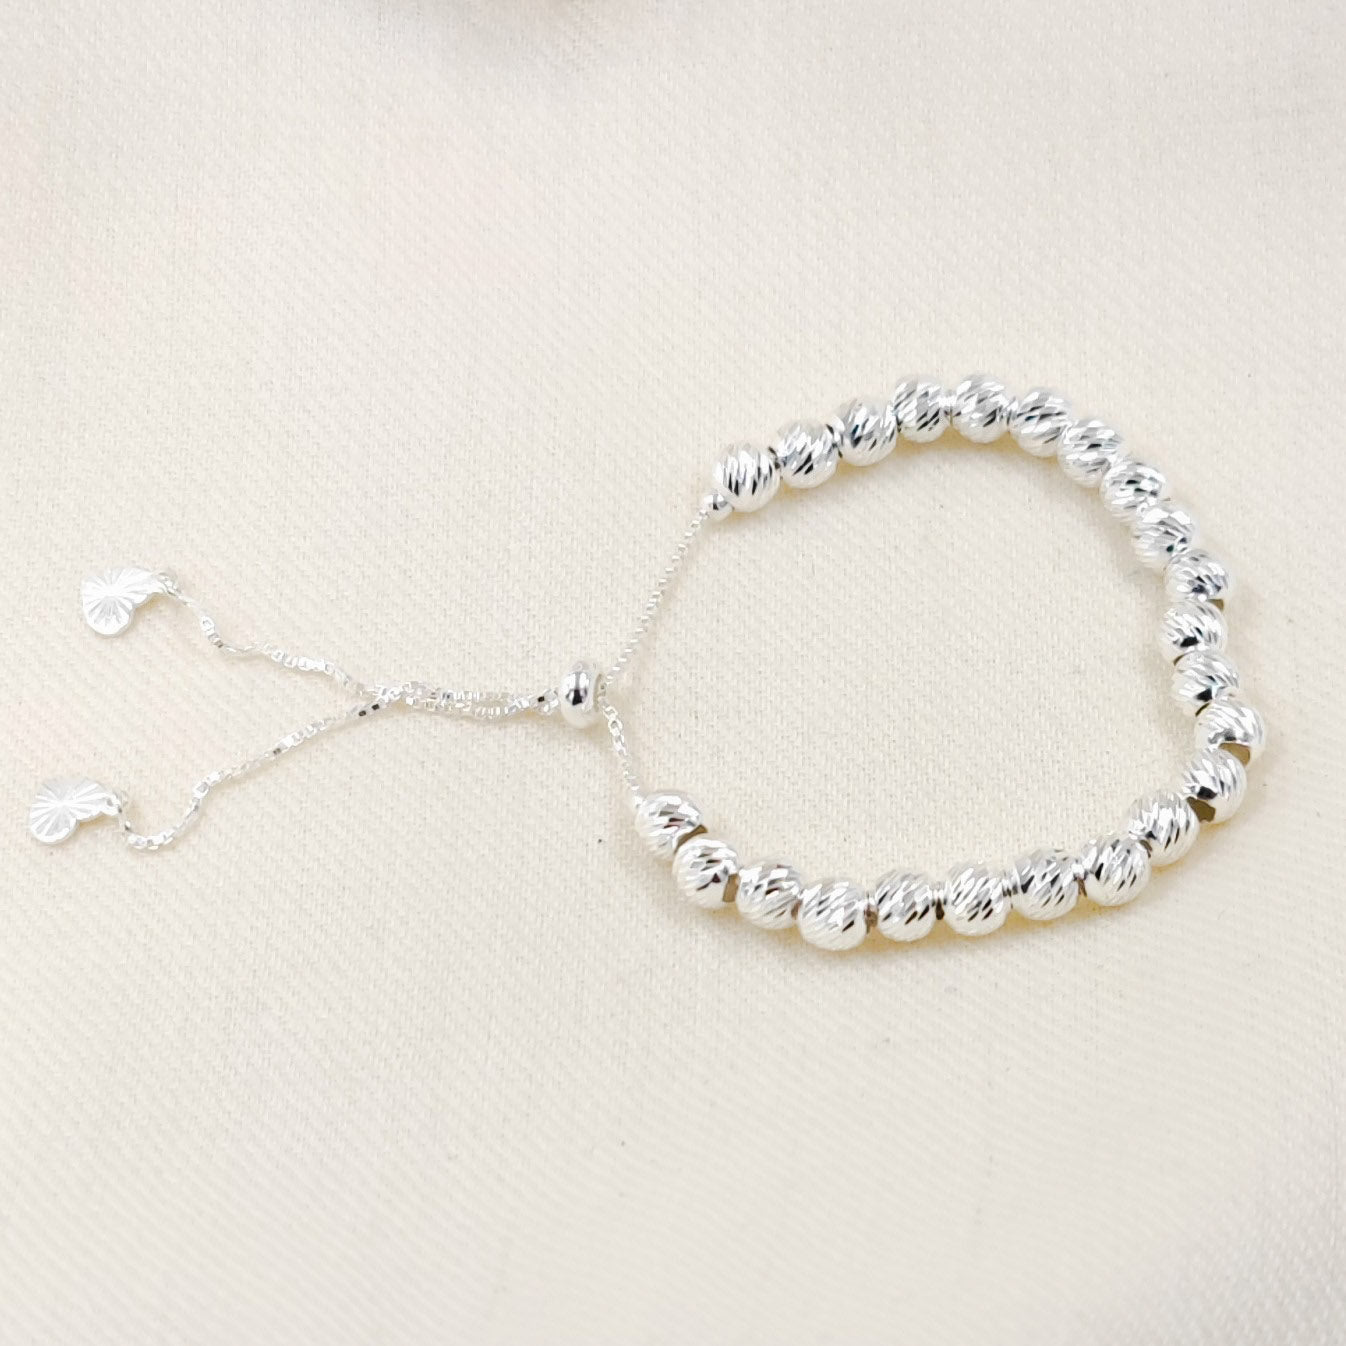 Silver Jewelry Bracelets by Jauhri 92.5 Silver - Reaching For Stars Bracelet